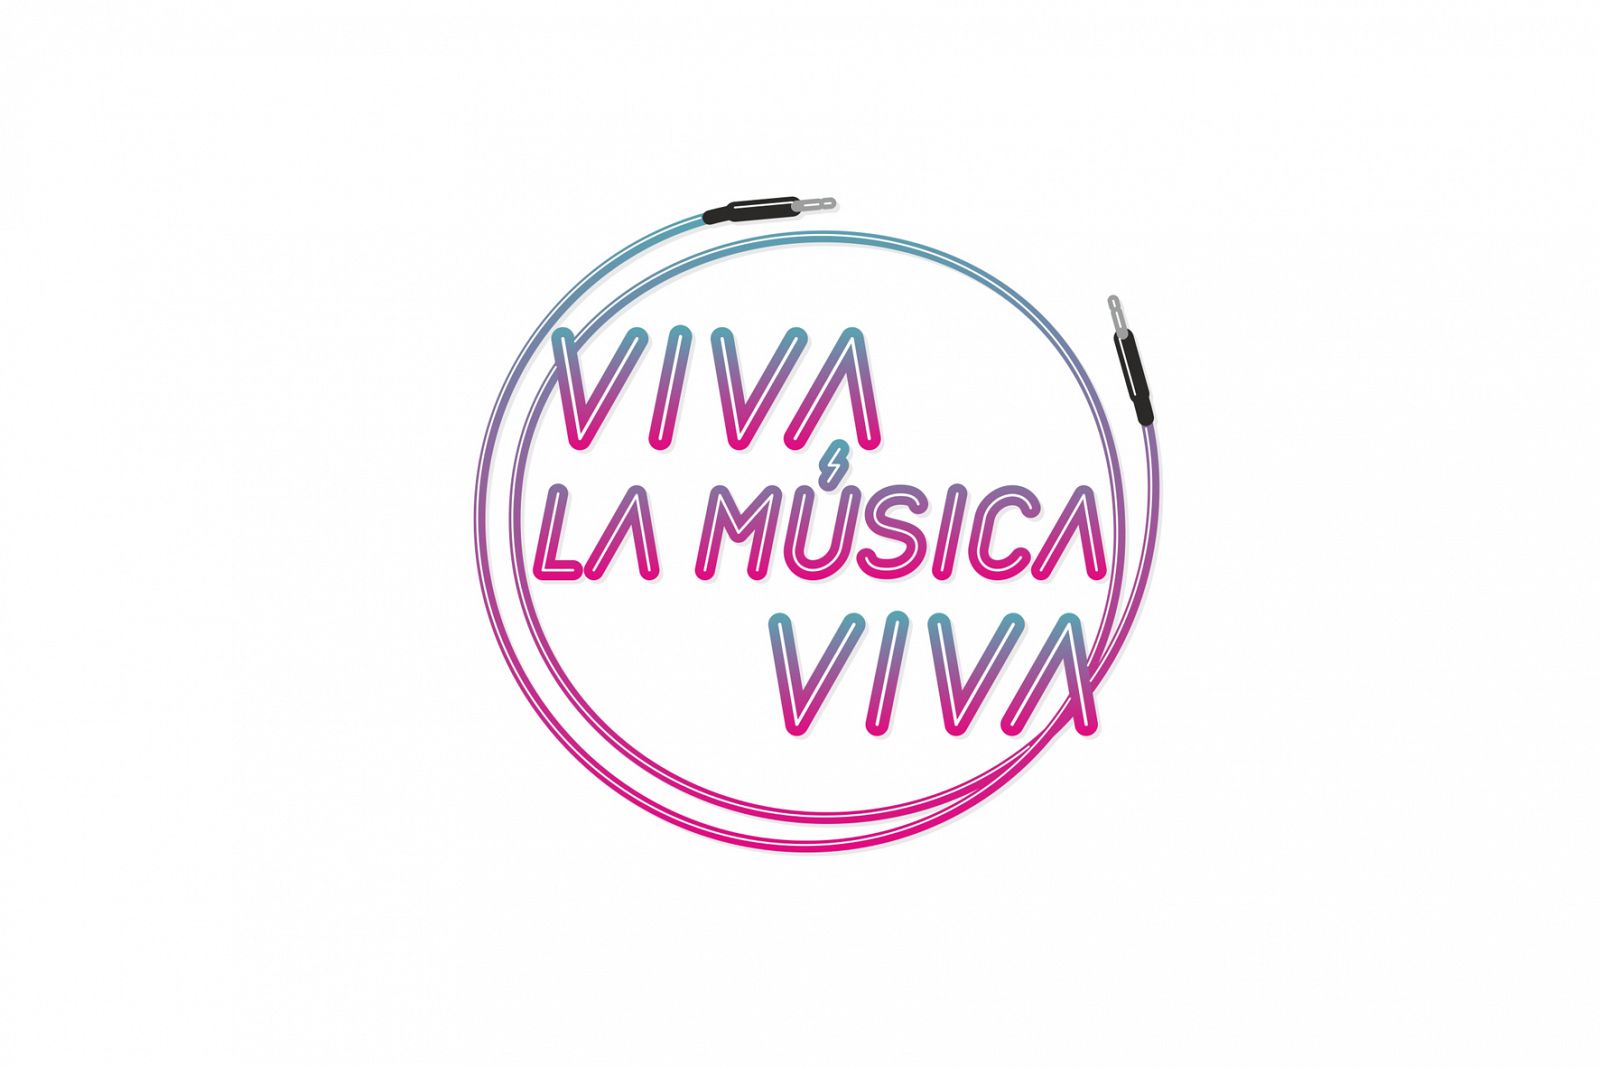 'Viva la música viva' recorrerá Palma de Mallorca, Pamplona, Lugo, Gijón, Burgos y Zaragoza, entre otras ciudades